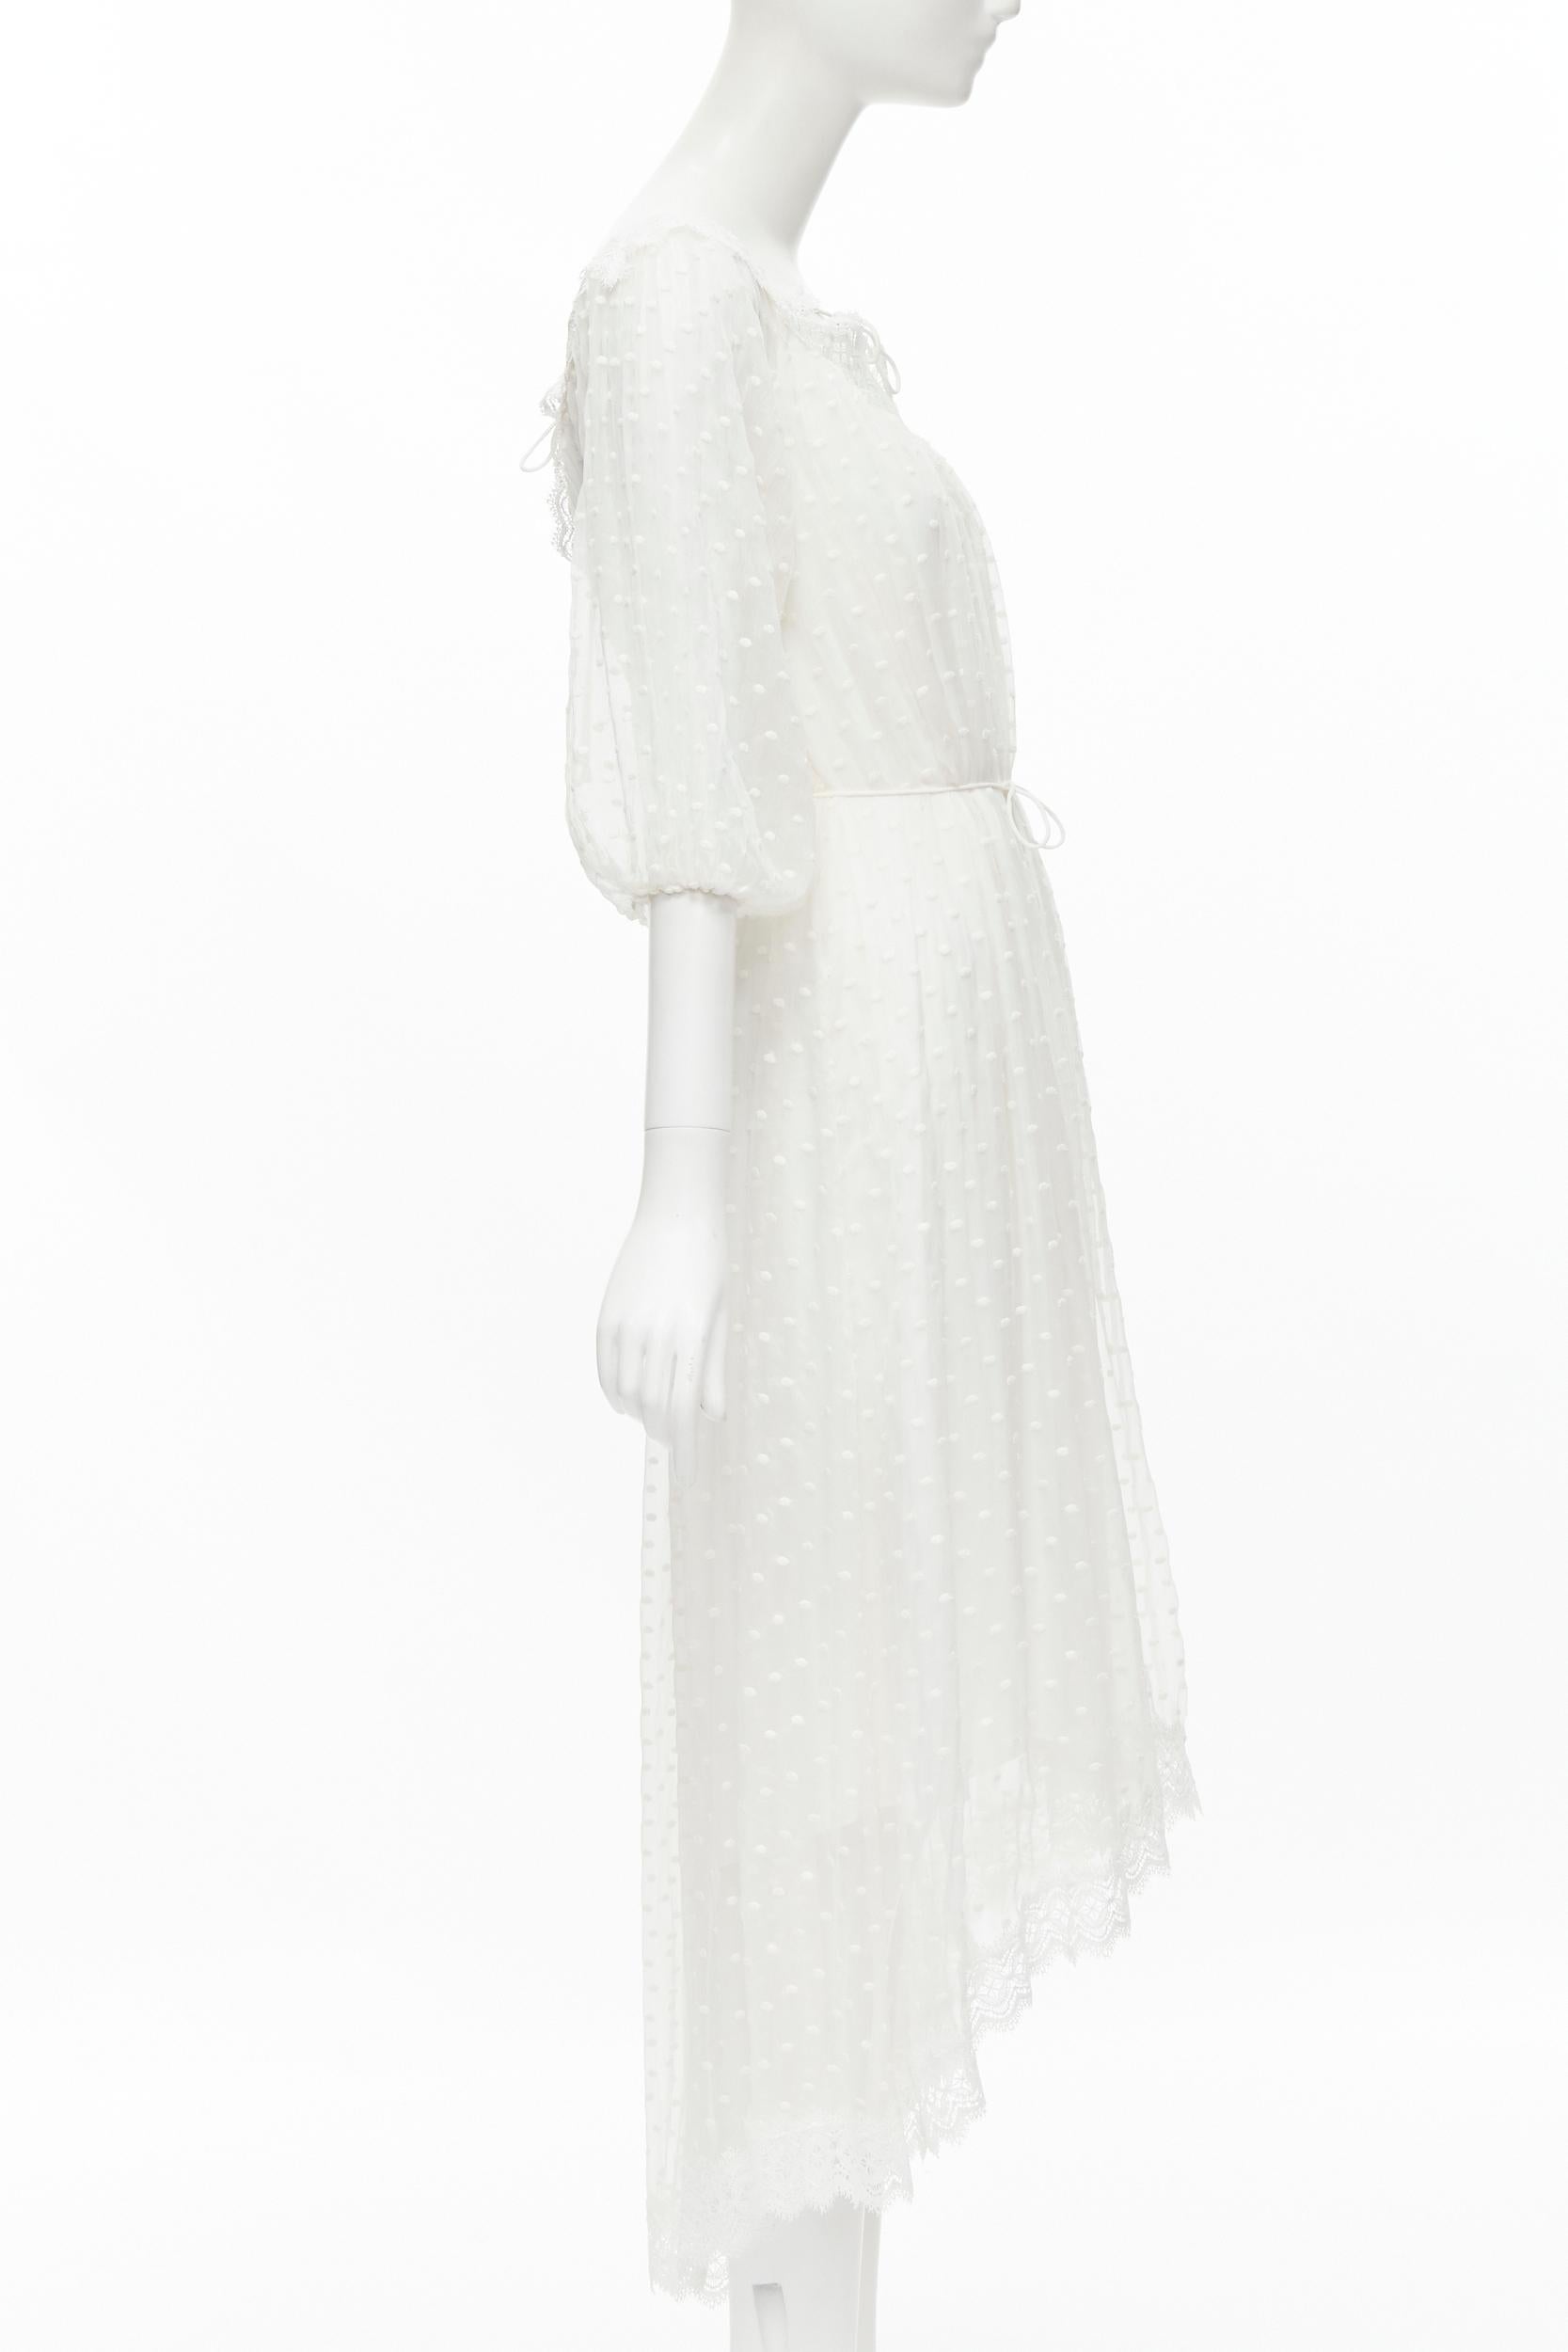 Gray ZIMMERMAN white lace trim polka dot embroidery semi sheer boho dress US0 XS